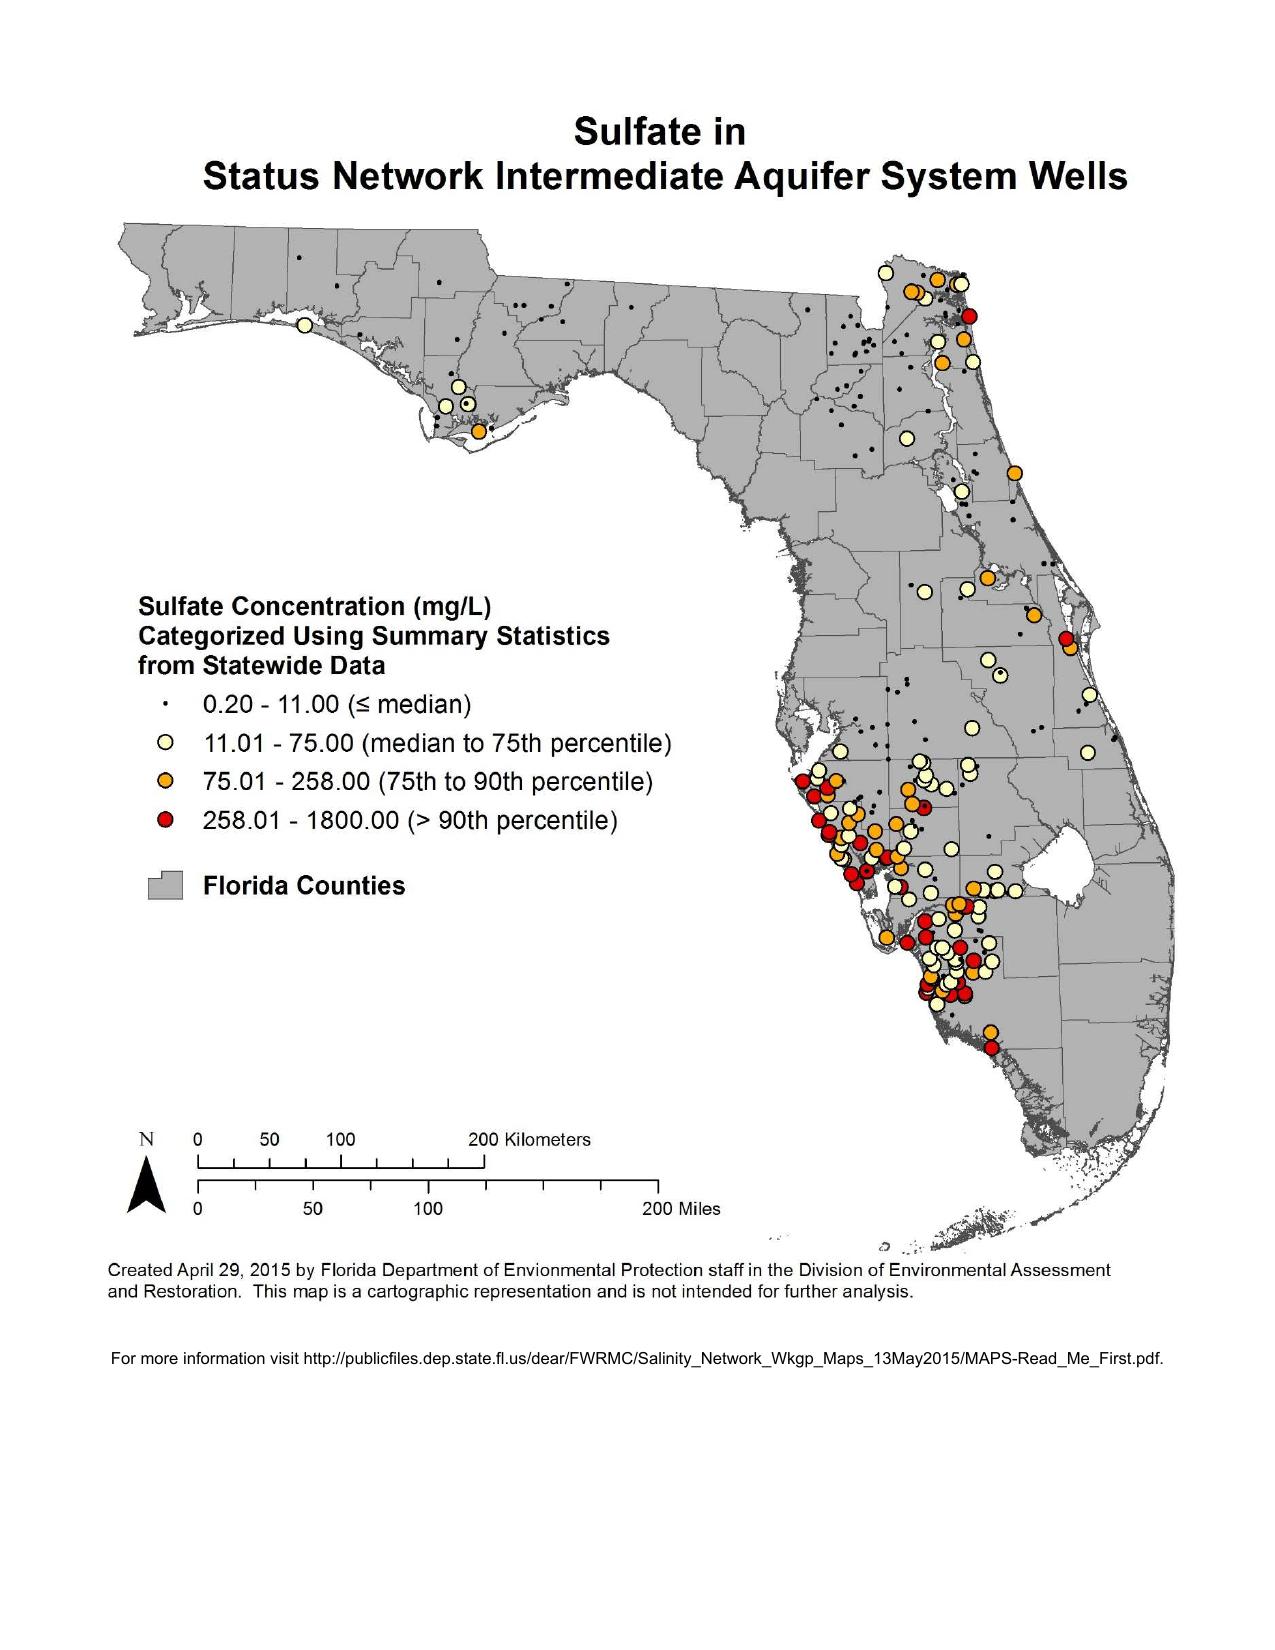 1275x1650 Sulfate in Status Network Intermediate Aquifer System Wells, in Florida Well Salinity Study, by FL-DEP, 13 July 2015